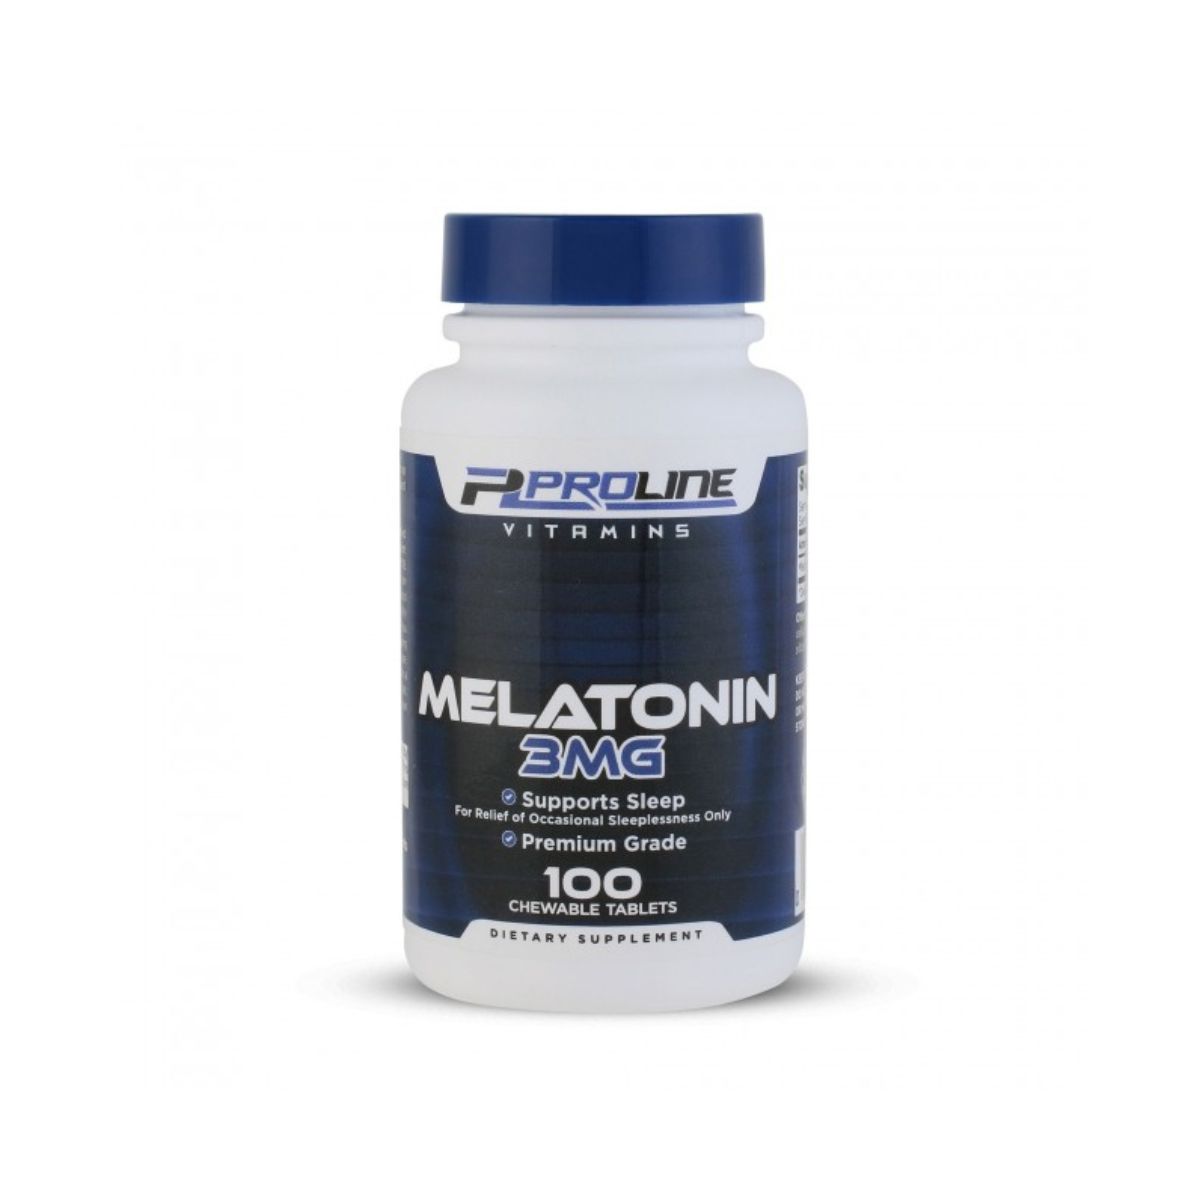 Melatonina 3mg 100 Chewable tablets - Proline Vitamins